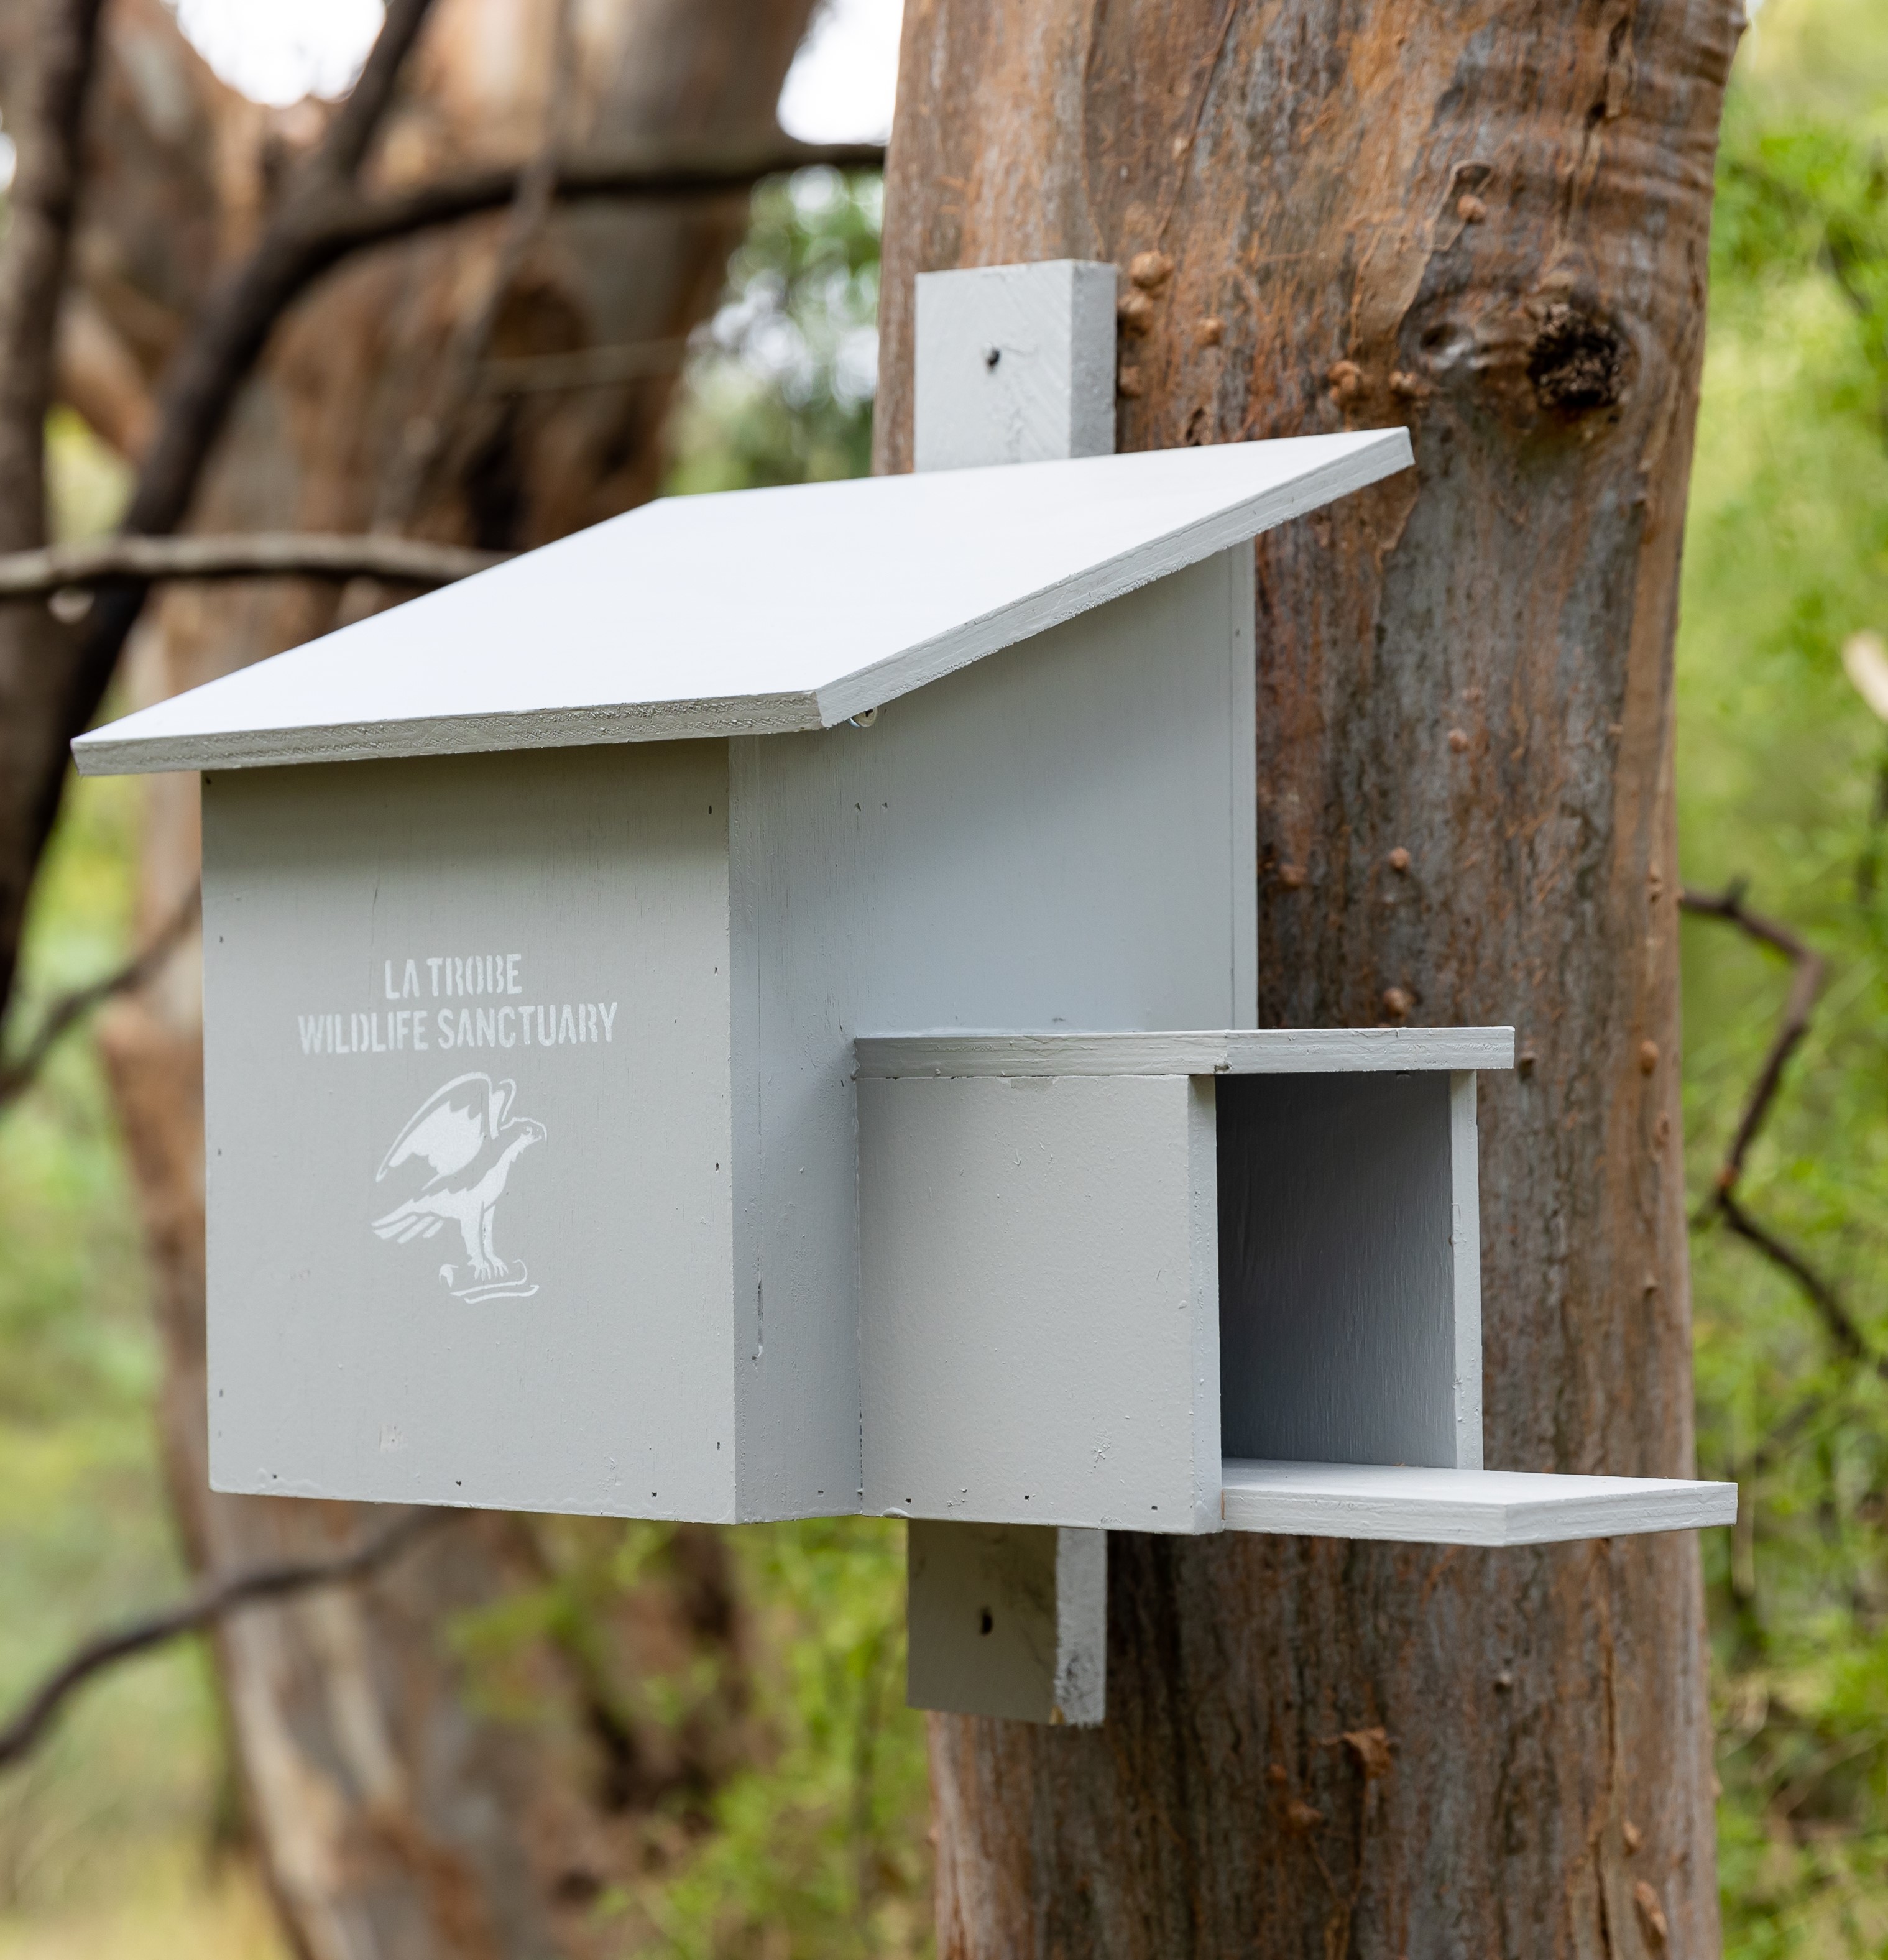 Kookaburra nest box